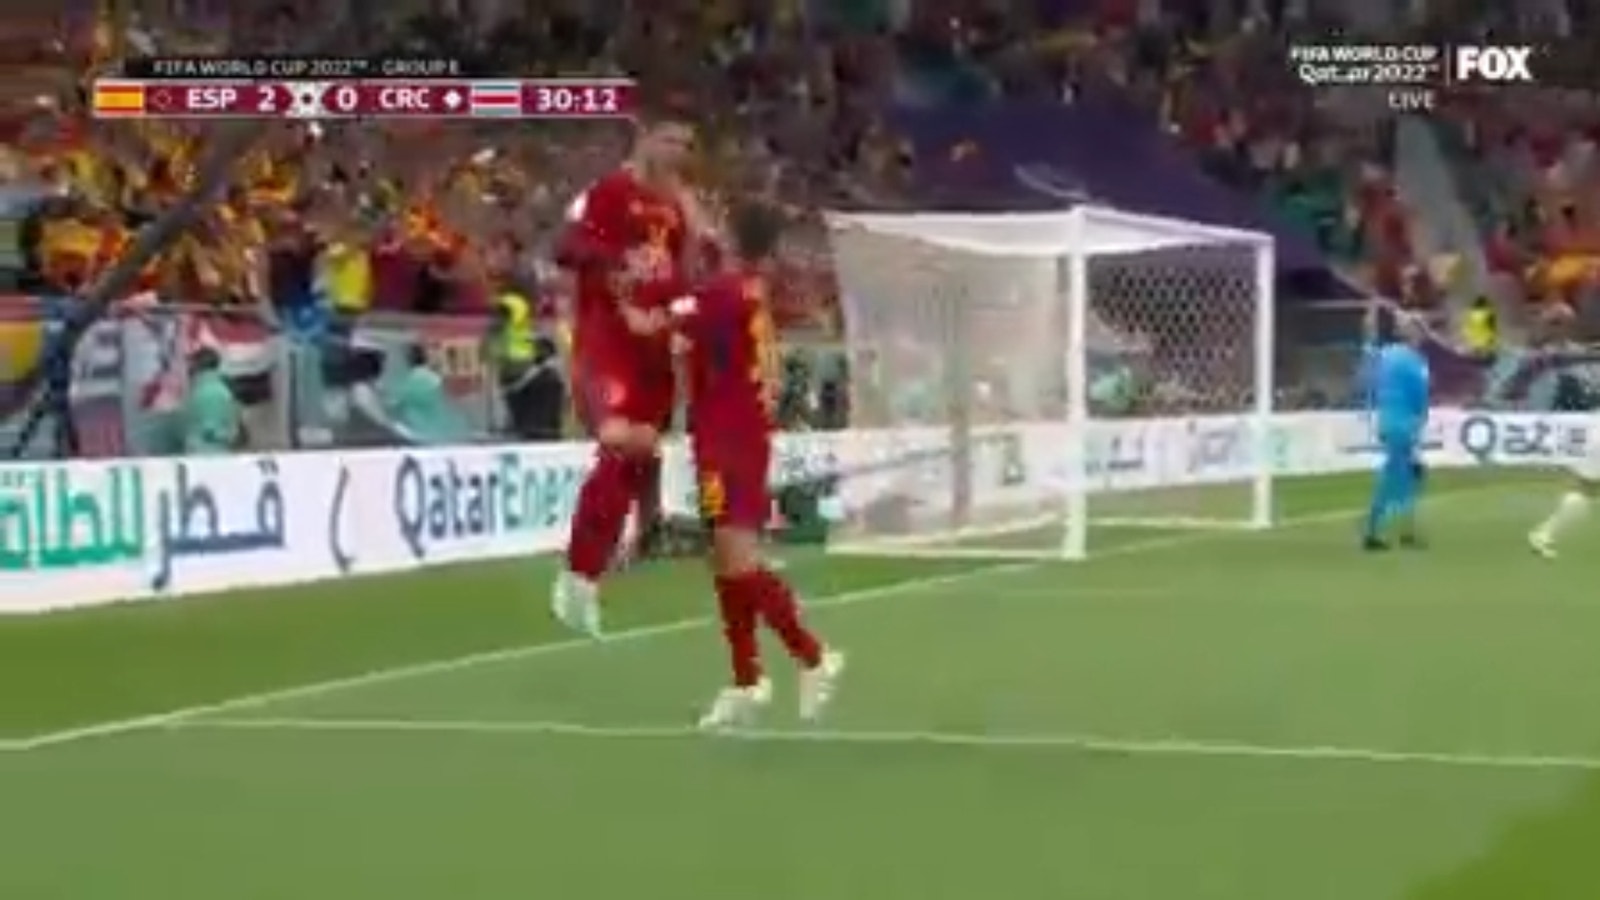 Spain's Ferran Torres scores in the 31st minute against Costa Rica